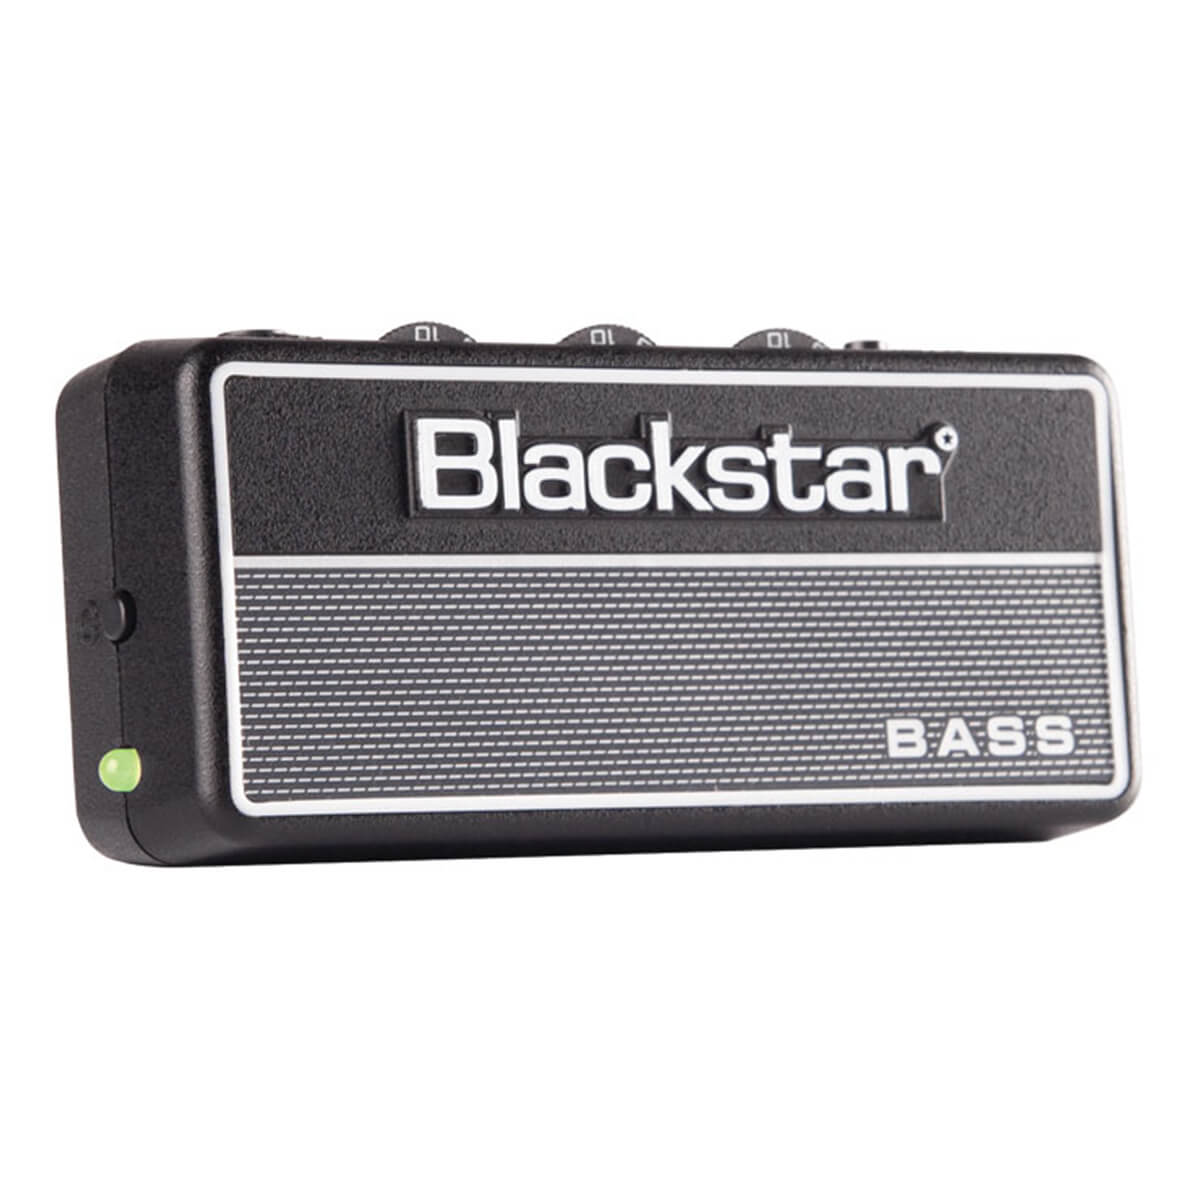 Blackstar amPlug 2 FLY Bass amp folded closed